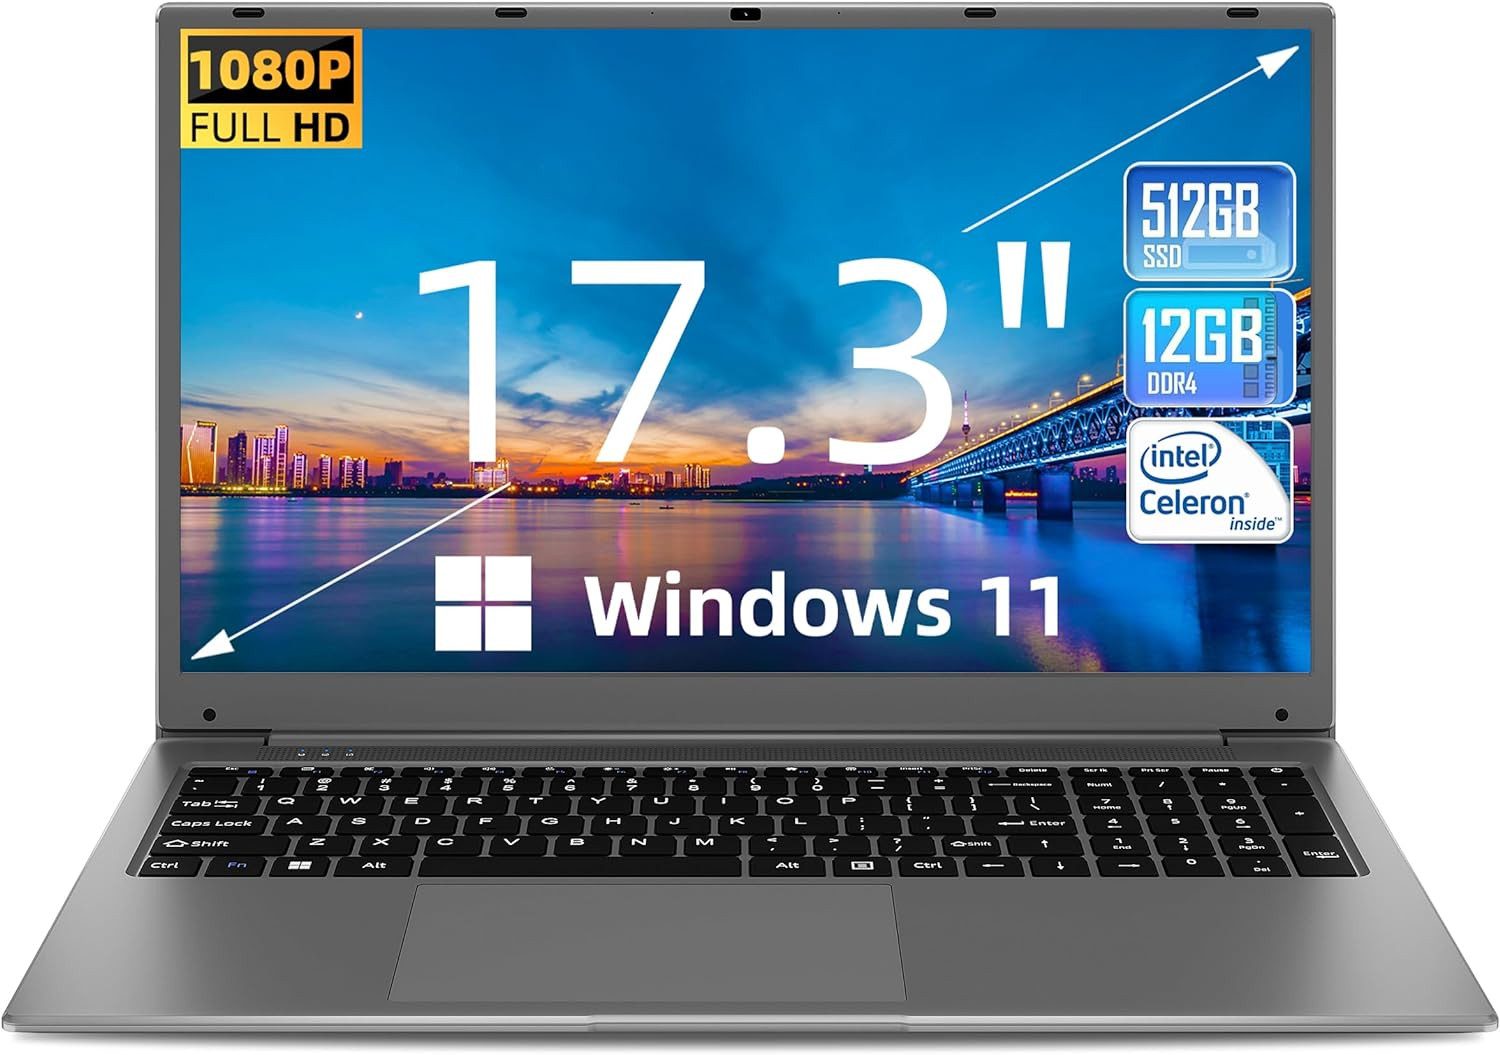 SGIN Notebook (Intel, 512 GB SSD, 5000 mAh,HD IPS, 2 xUSB 3.0 Bluetooth 4.2 3,5-mm- Kopfhörerbuchse)